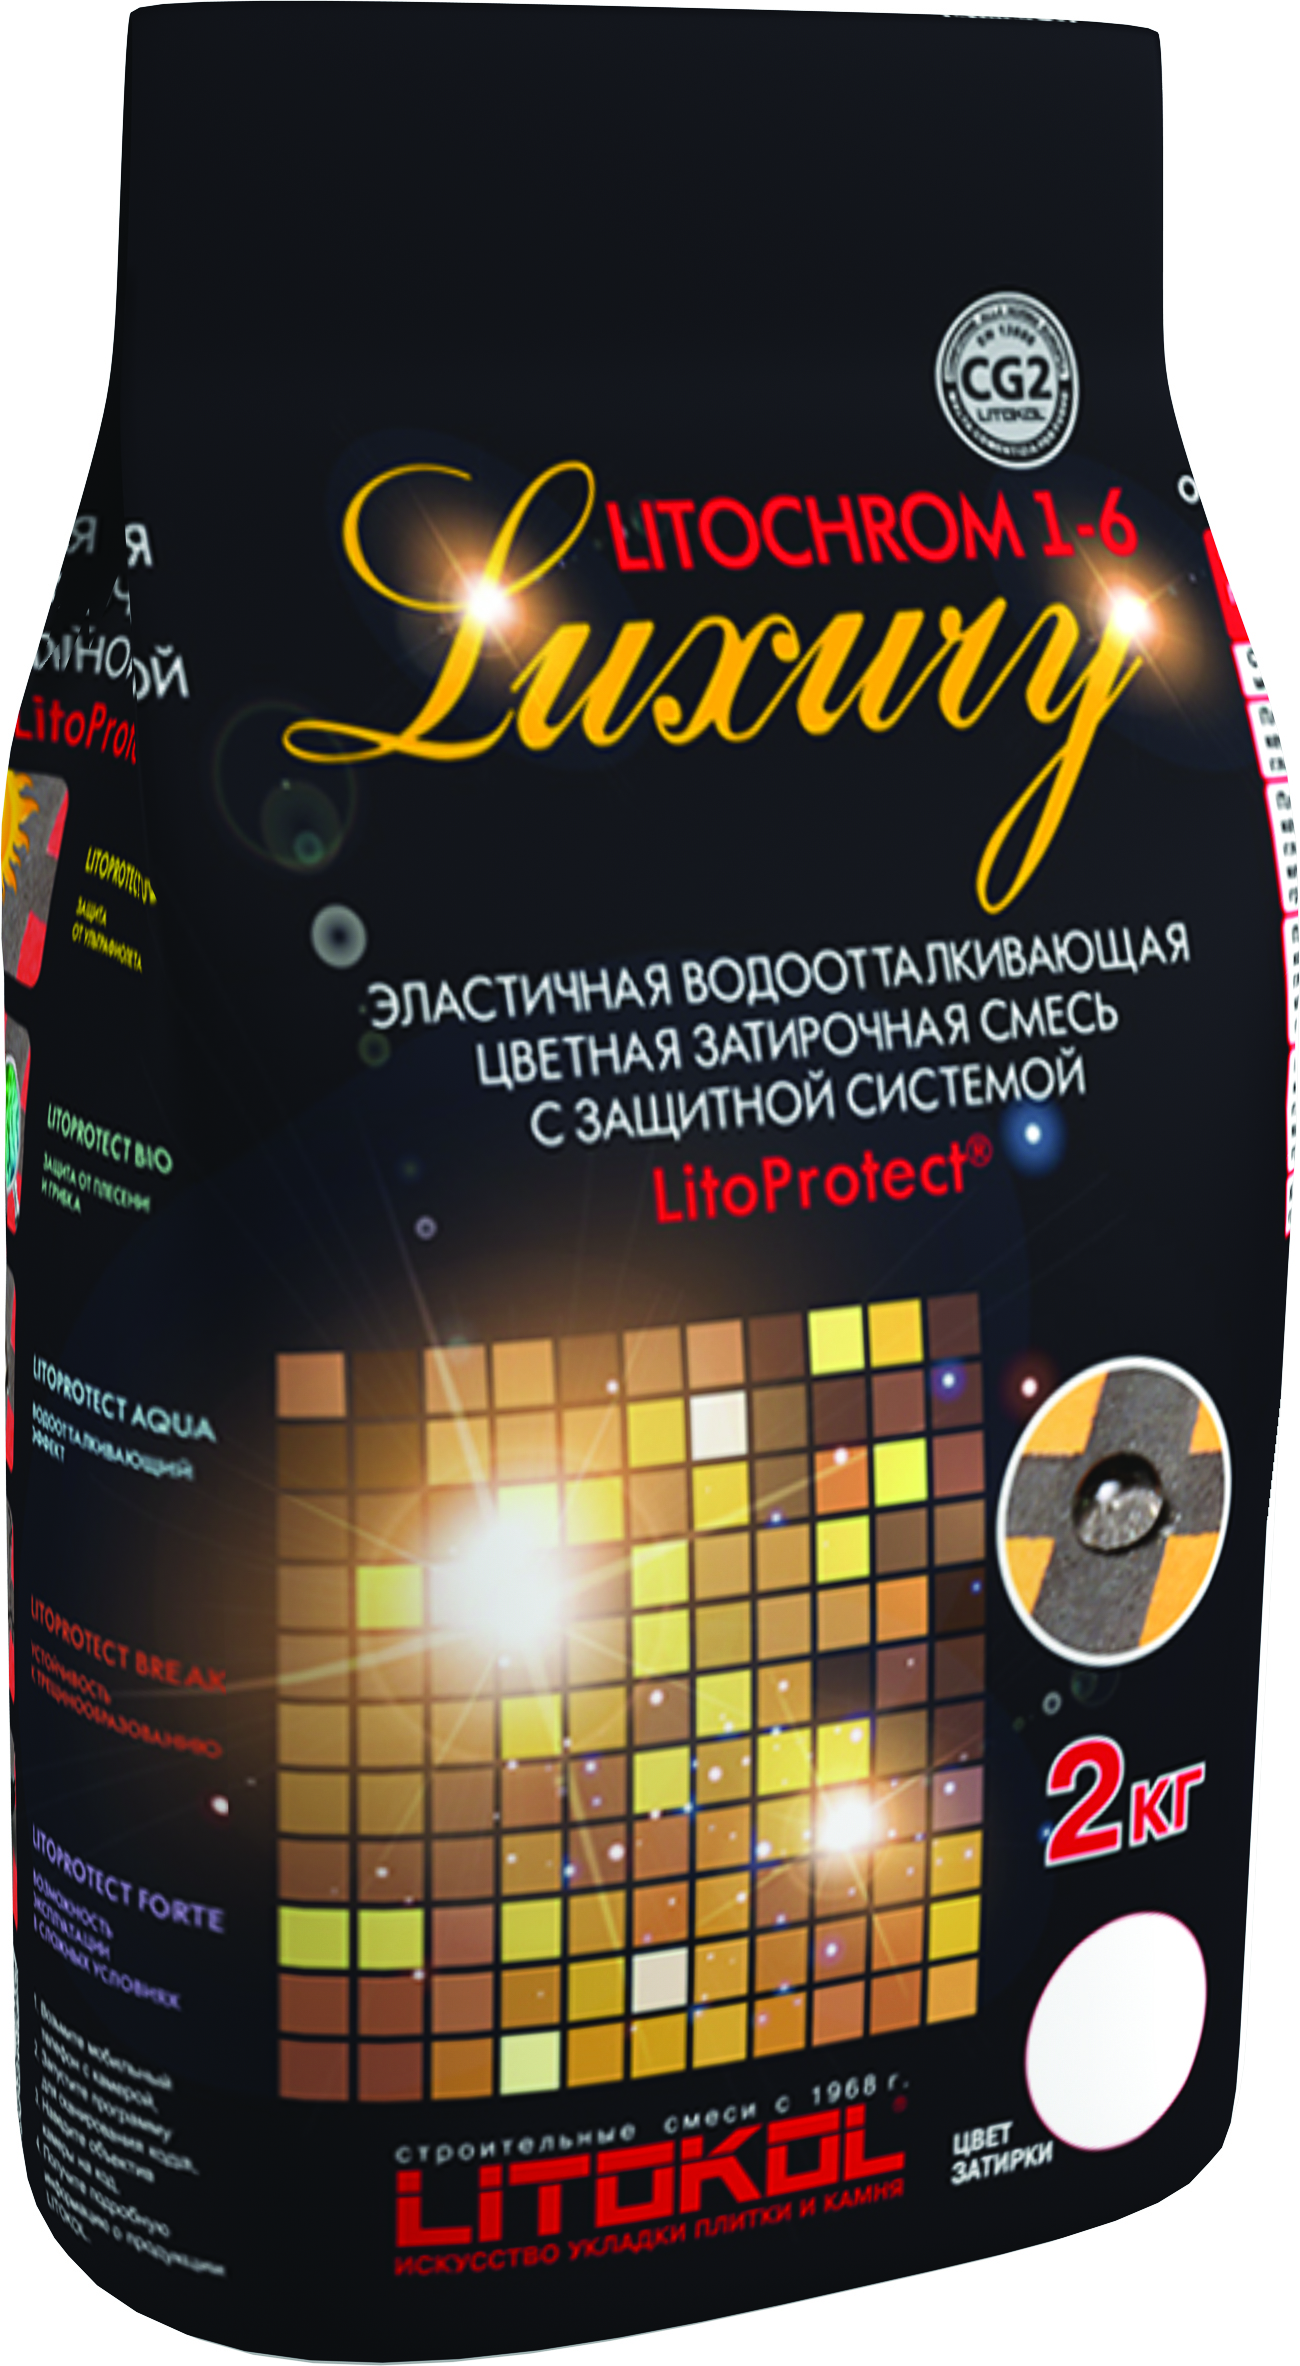 Купить Litokol Litochrom 1-6 Luxury C.610, 2 кг